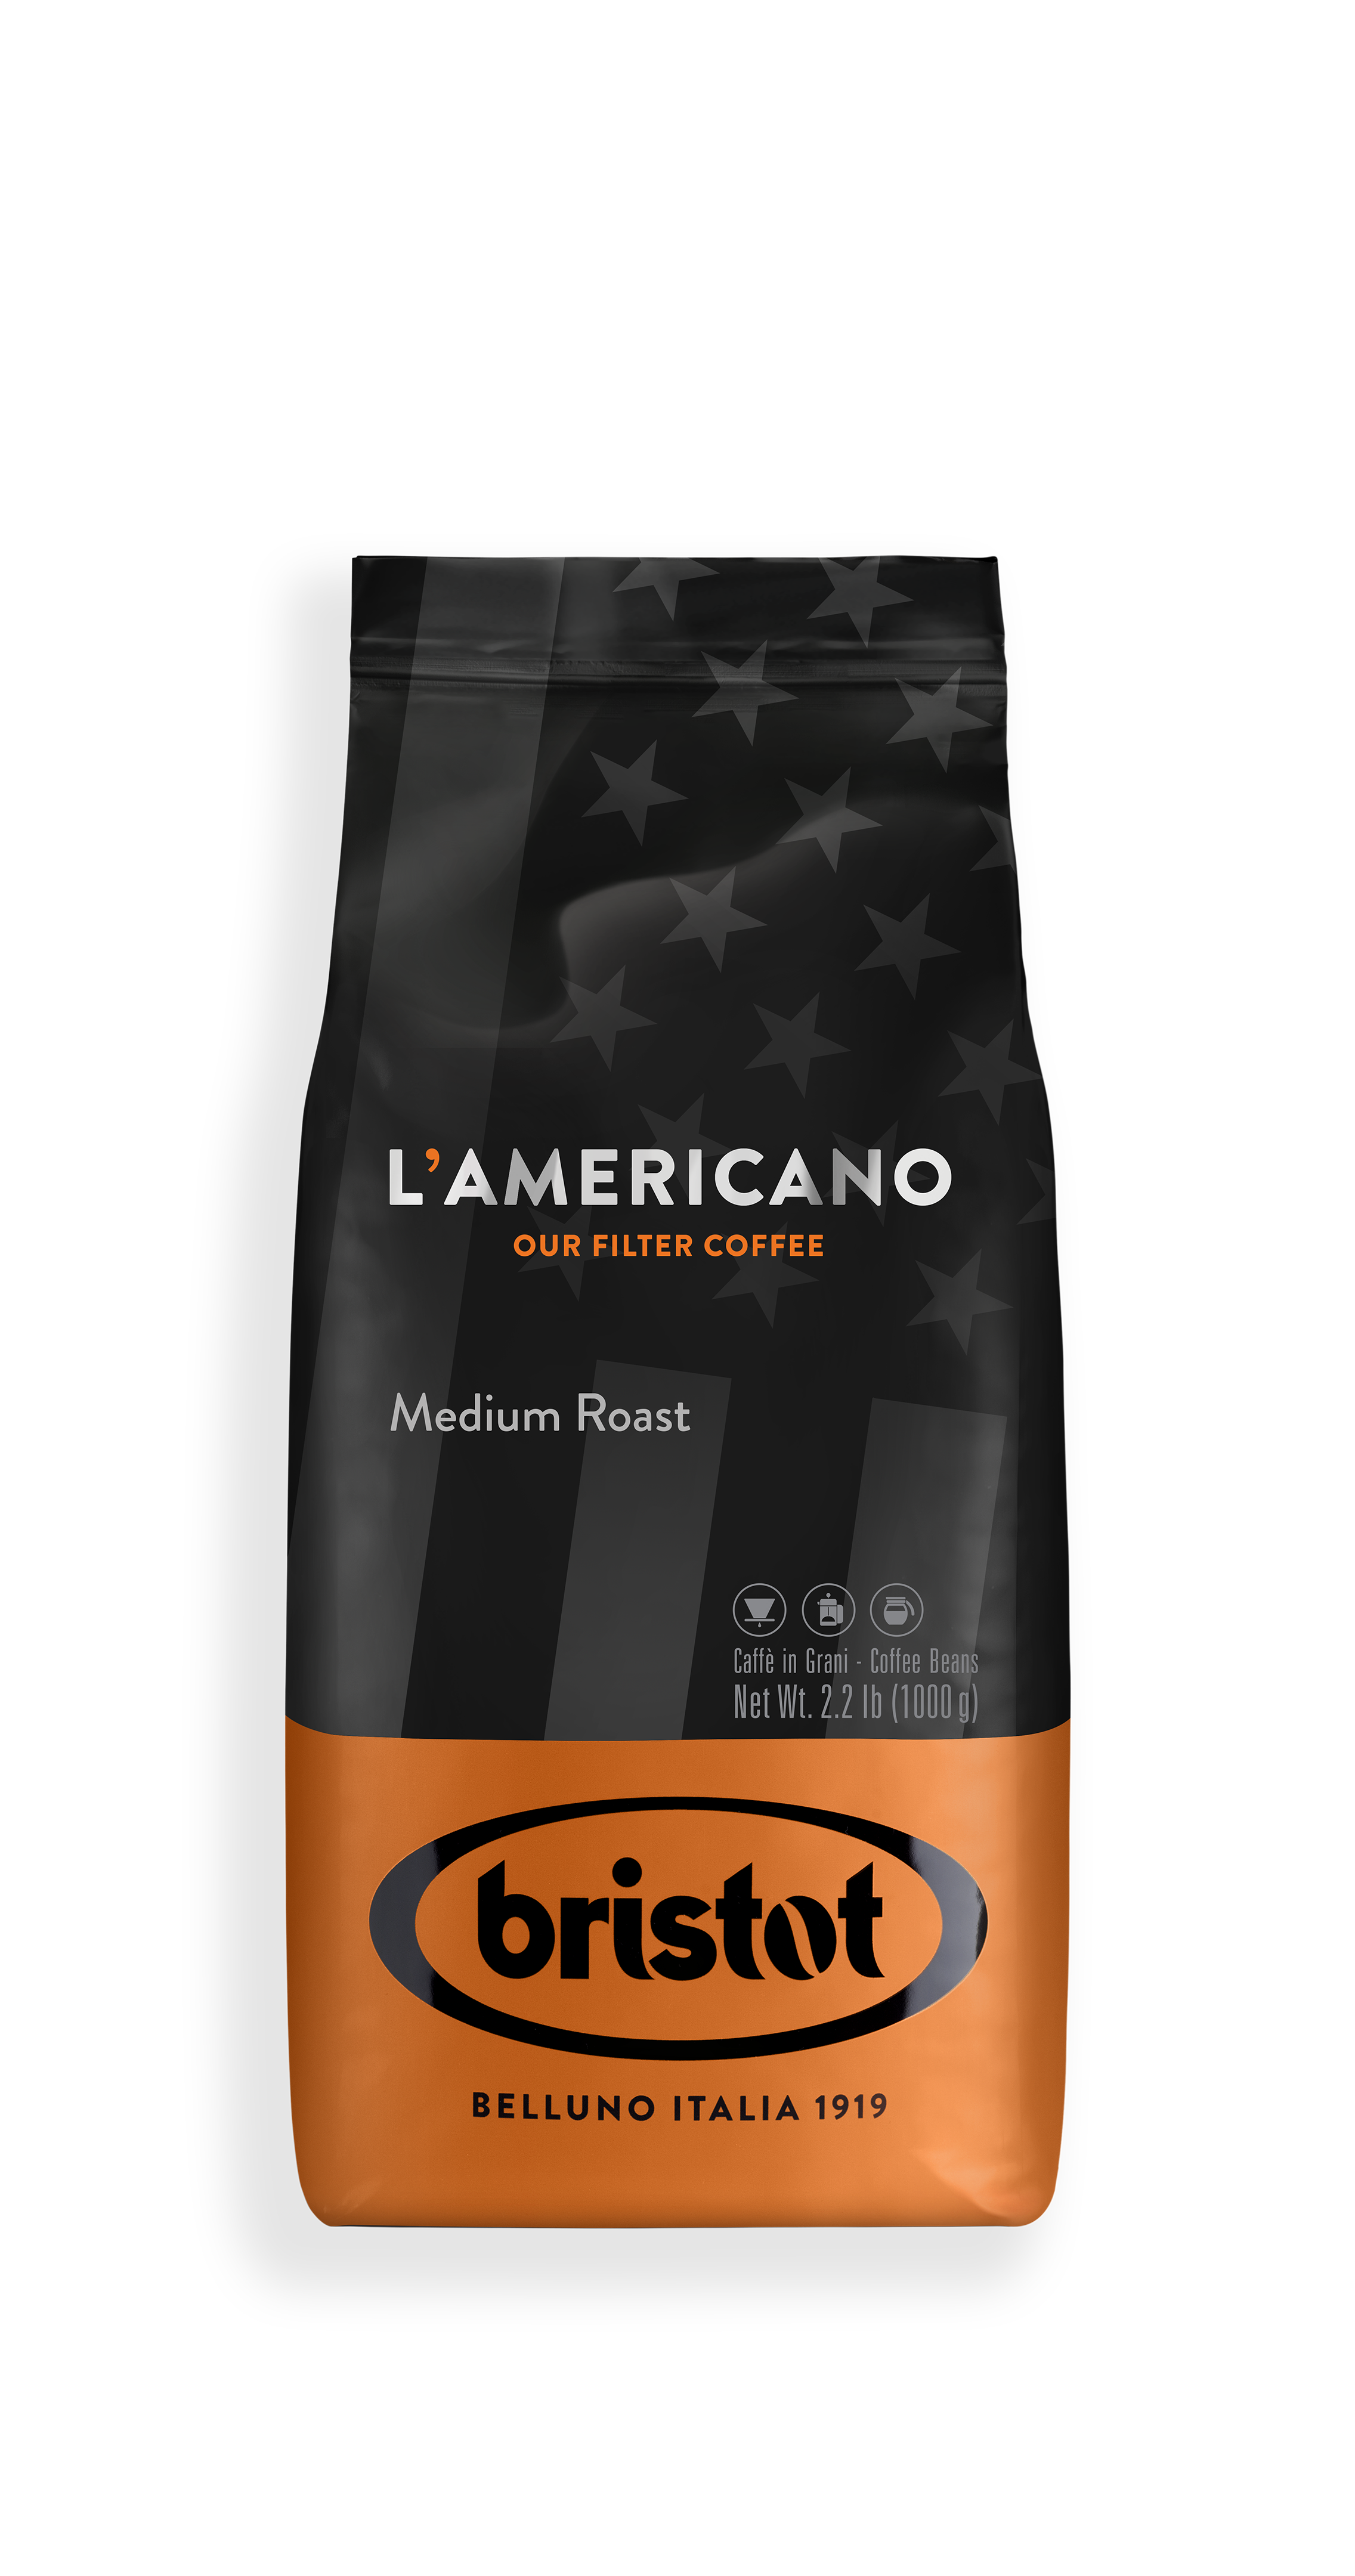 Bristot L'Americano Medium Roast